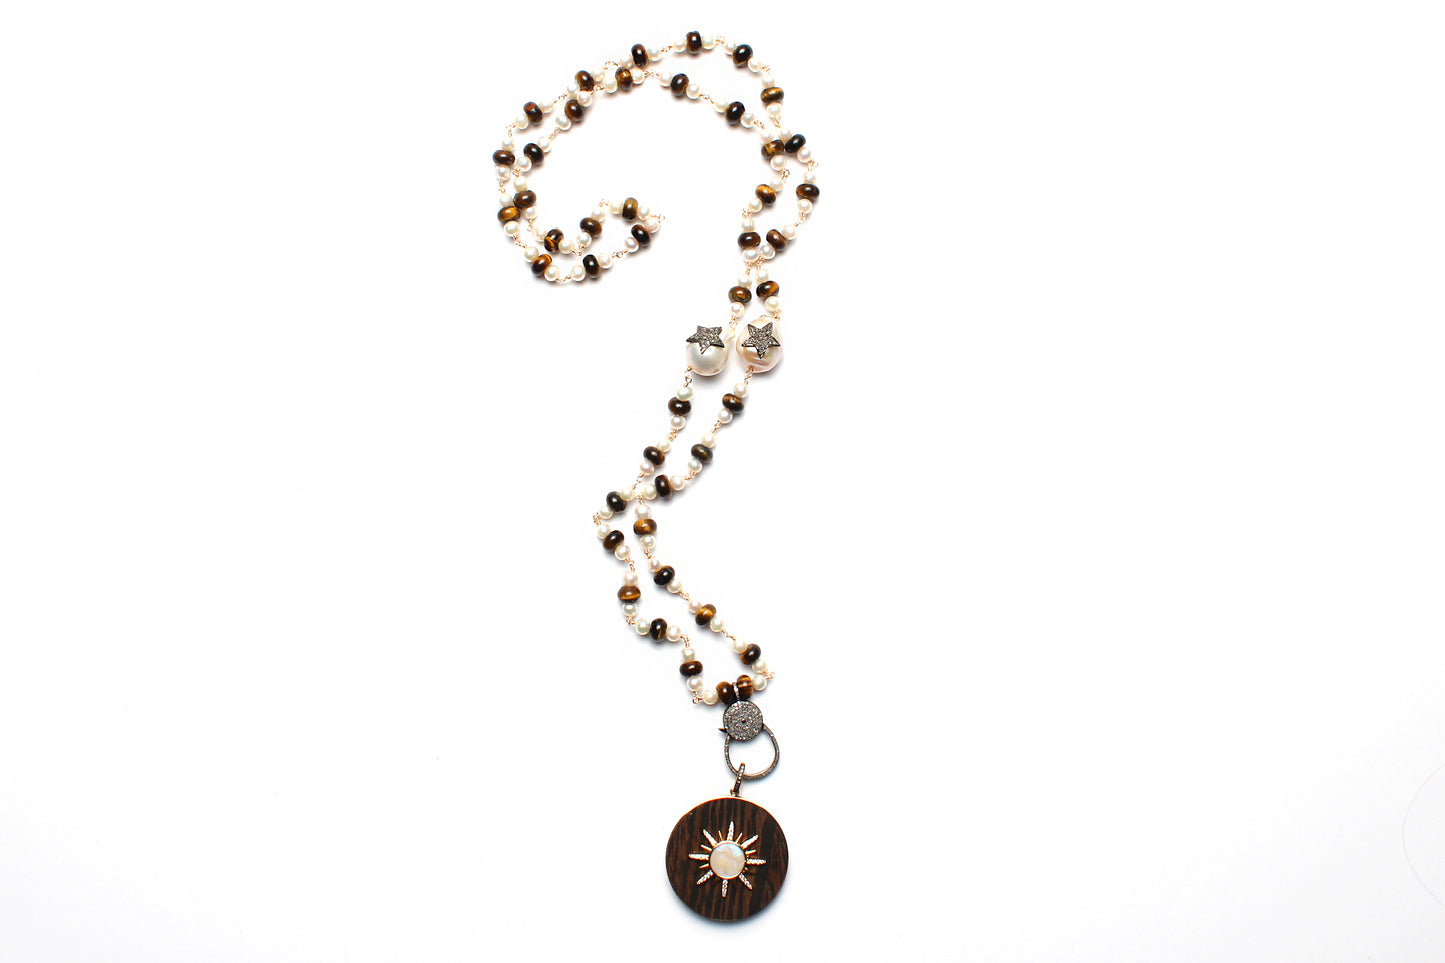 Signature 14k Gold Sapphire Diamond Mother of Pearl Ebony Evil Eye Pendant & Pearl Diamond Tiger's Eye Rosary